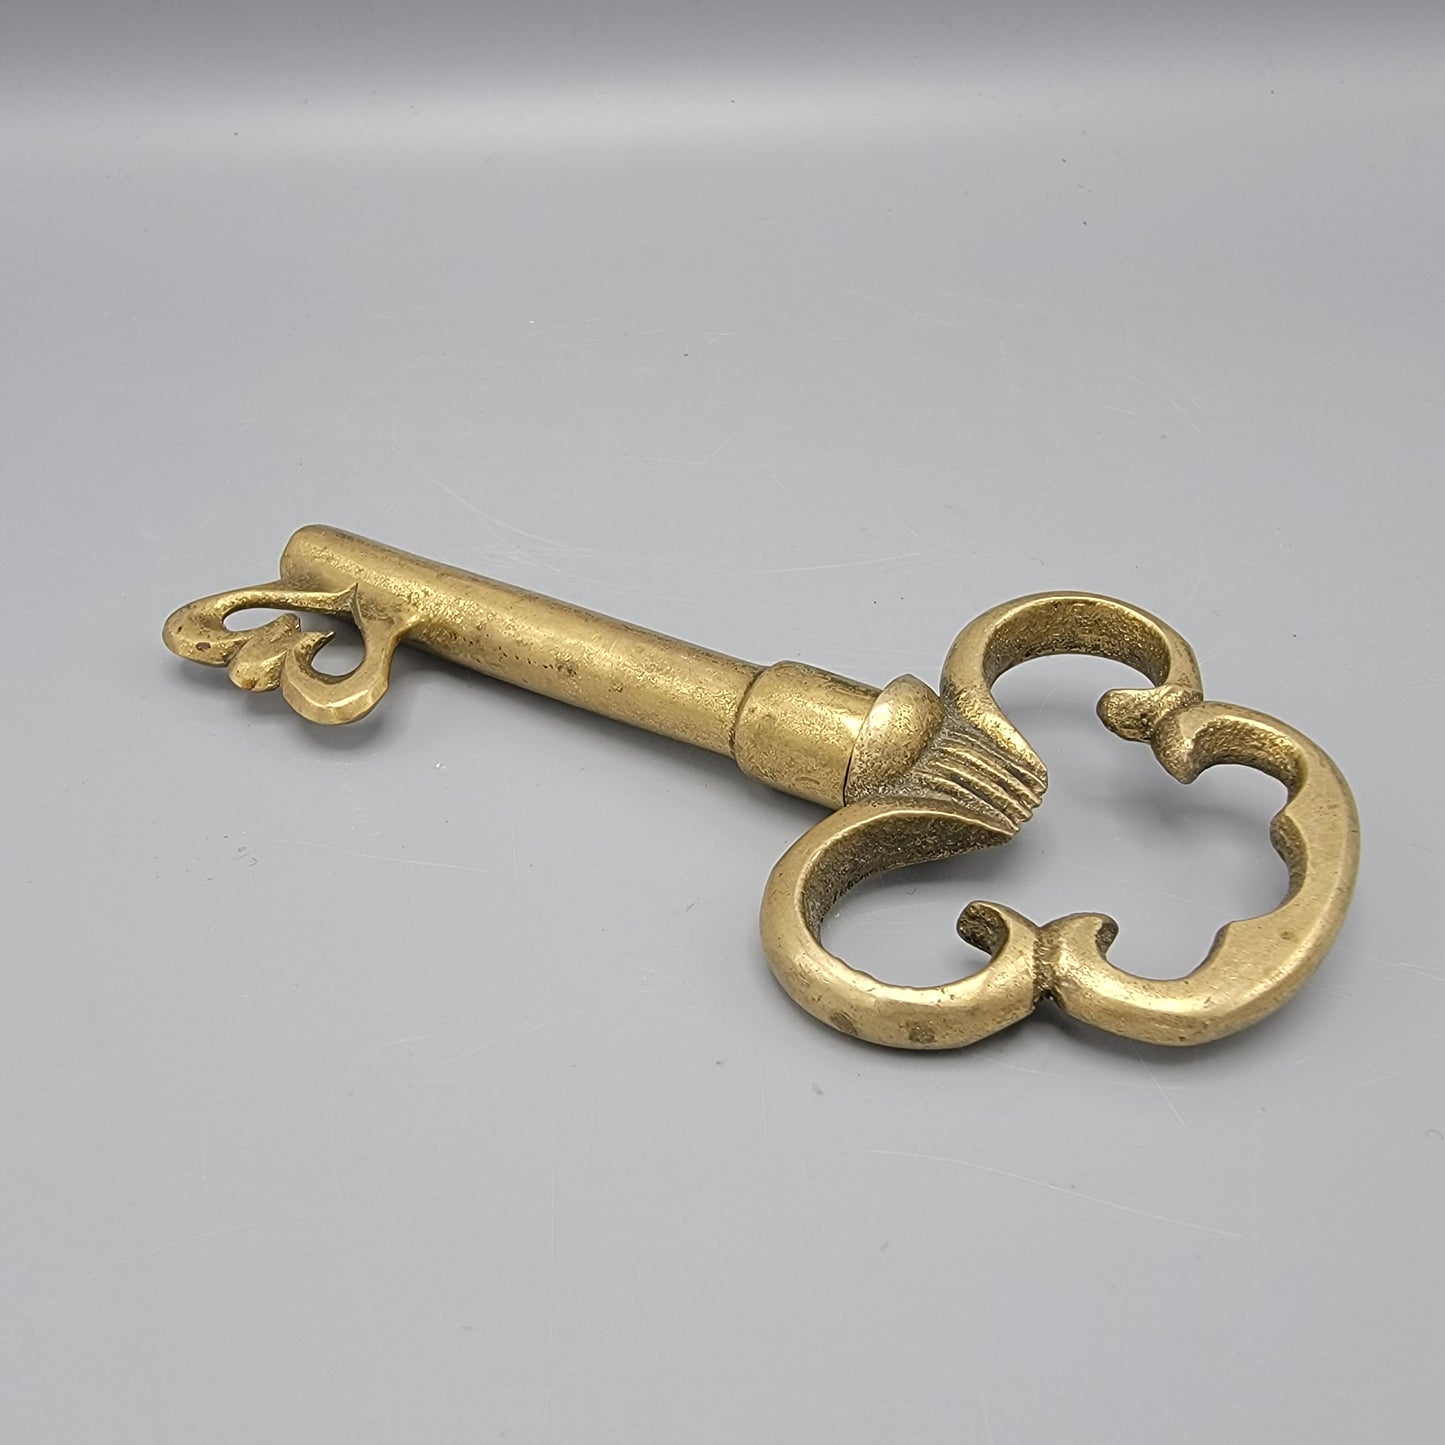 Aubock-Style Brass Key Paperweight